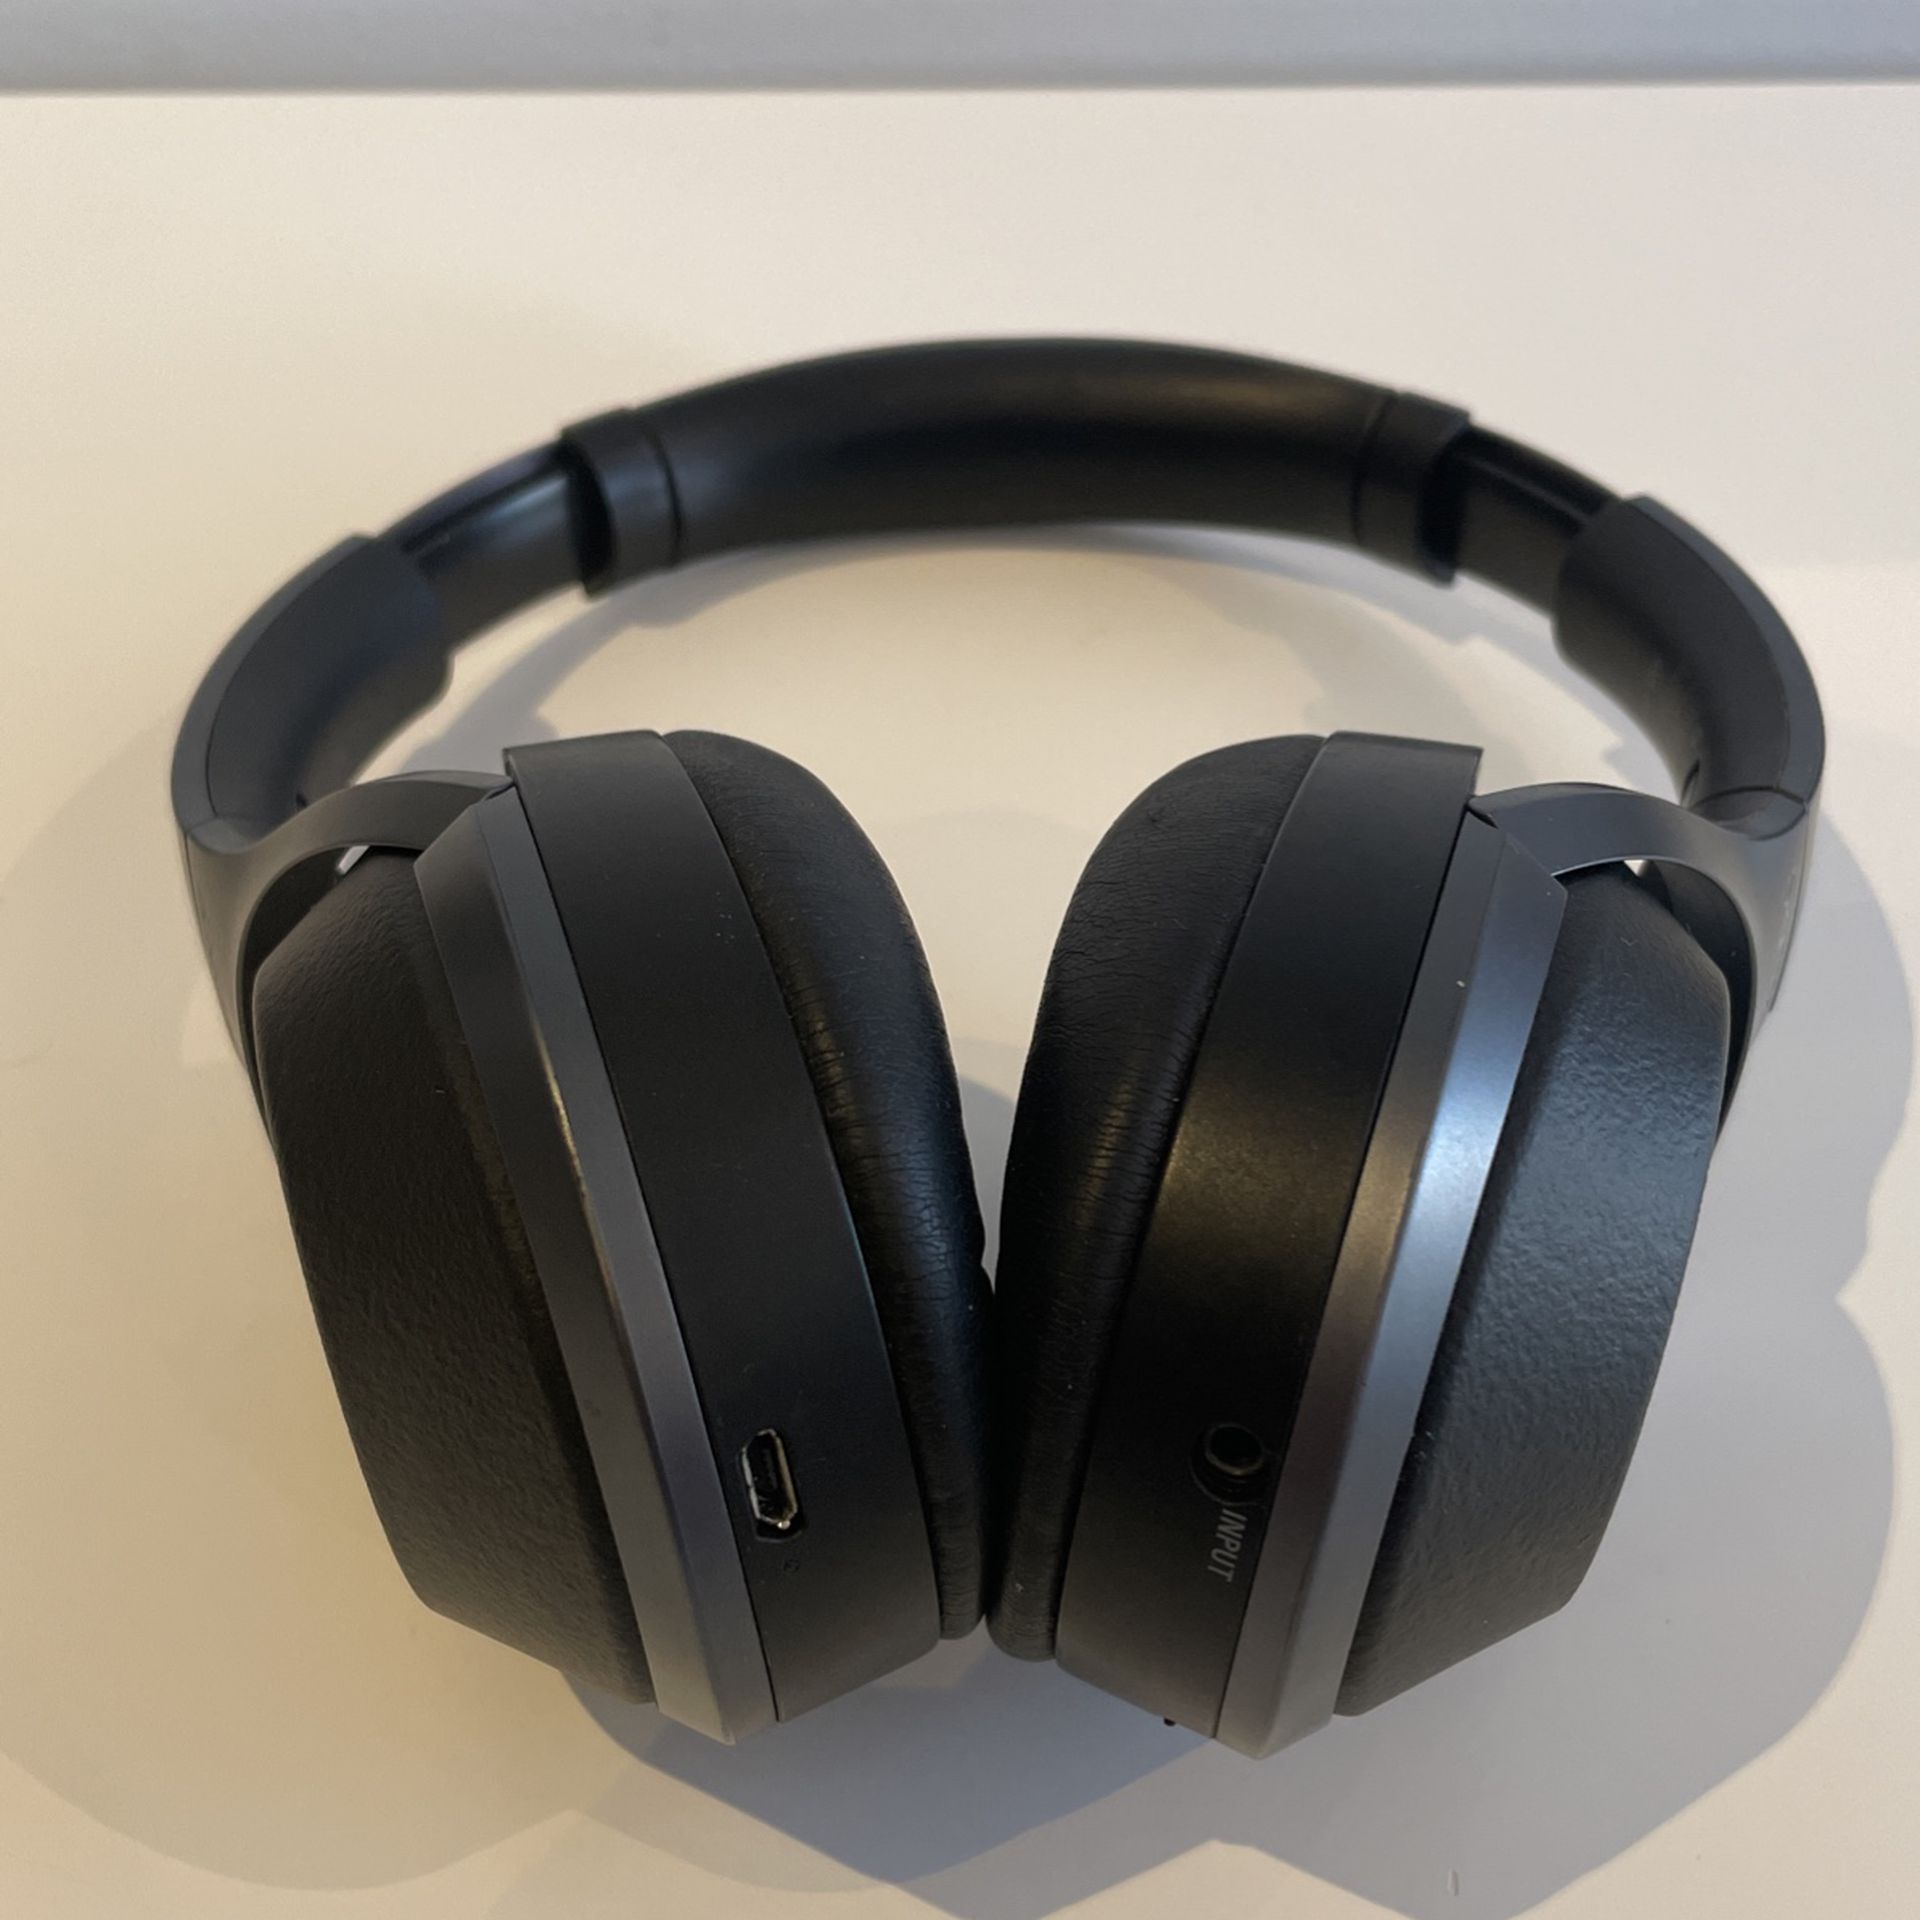 Sony 1000xm2 Noise Cancelling Bluetooth Headphones